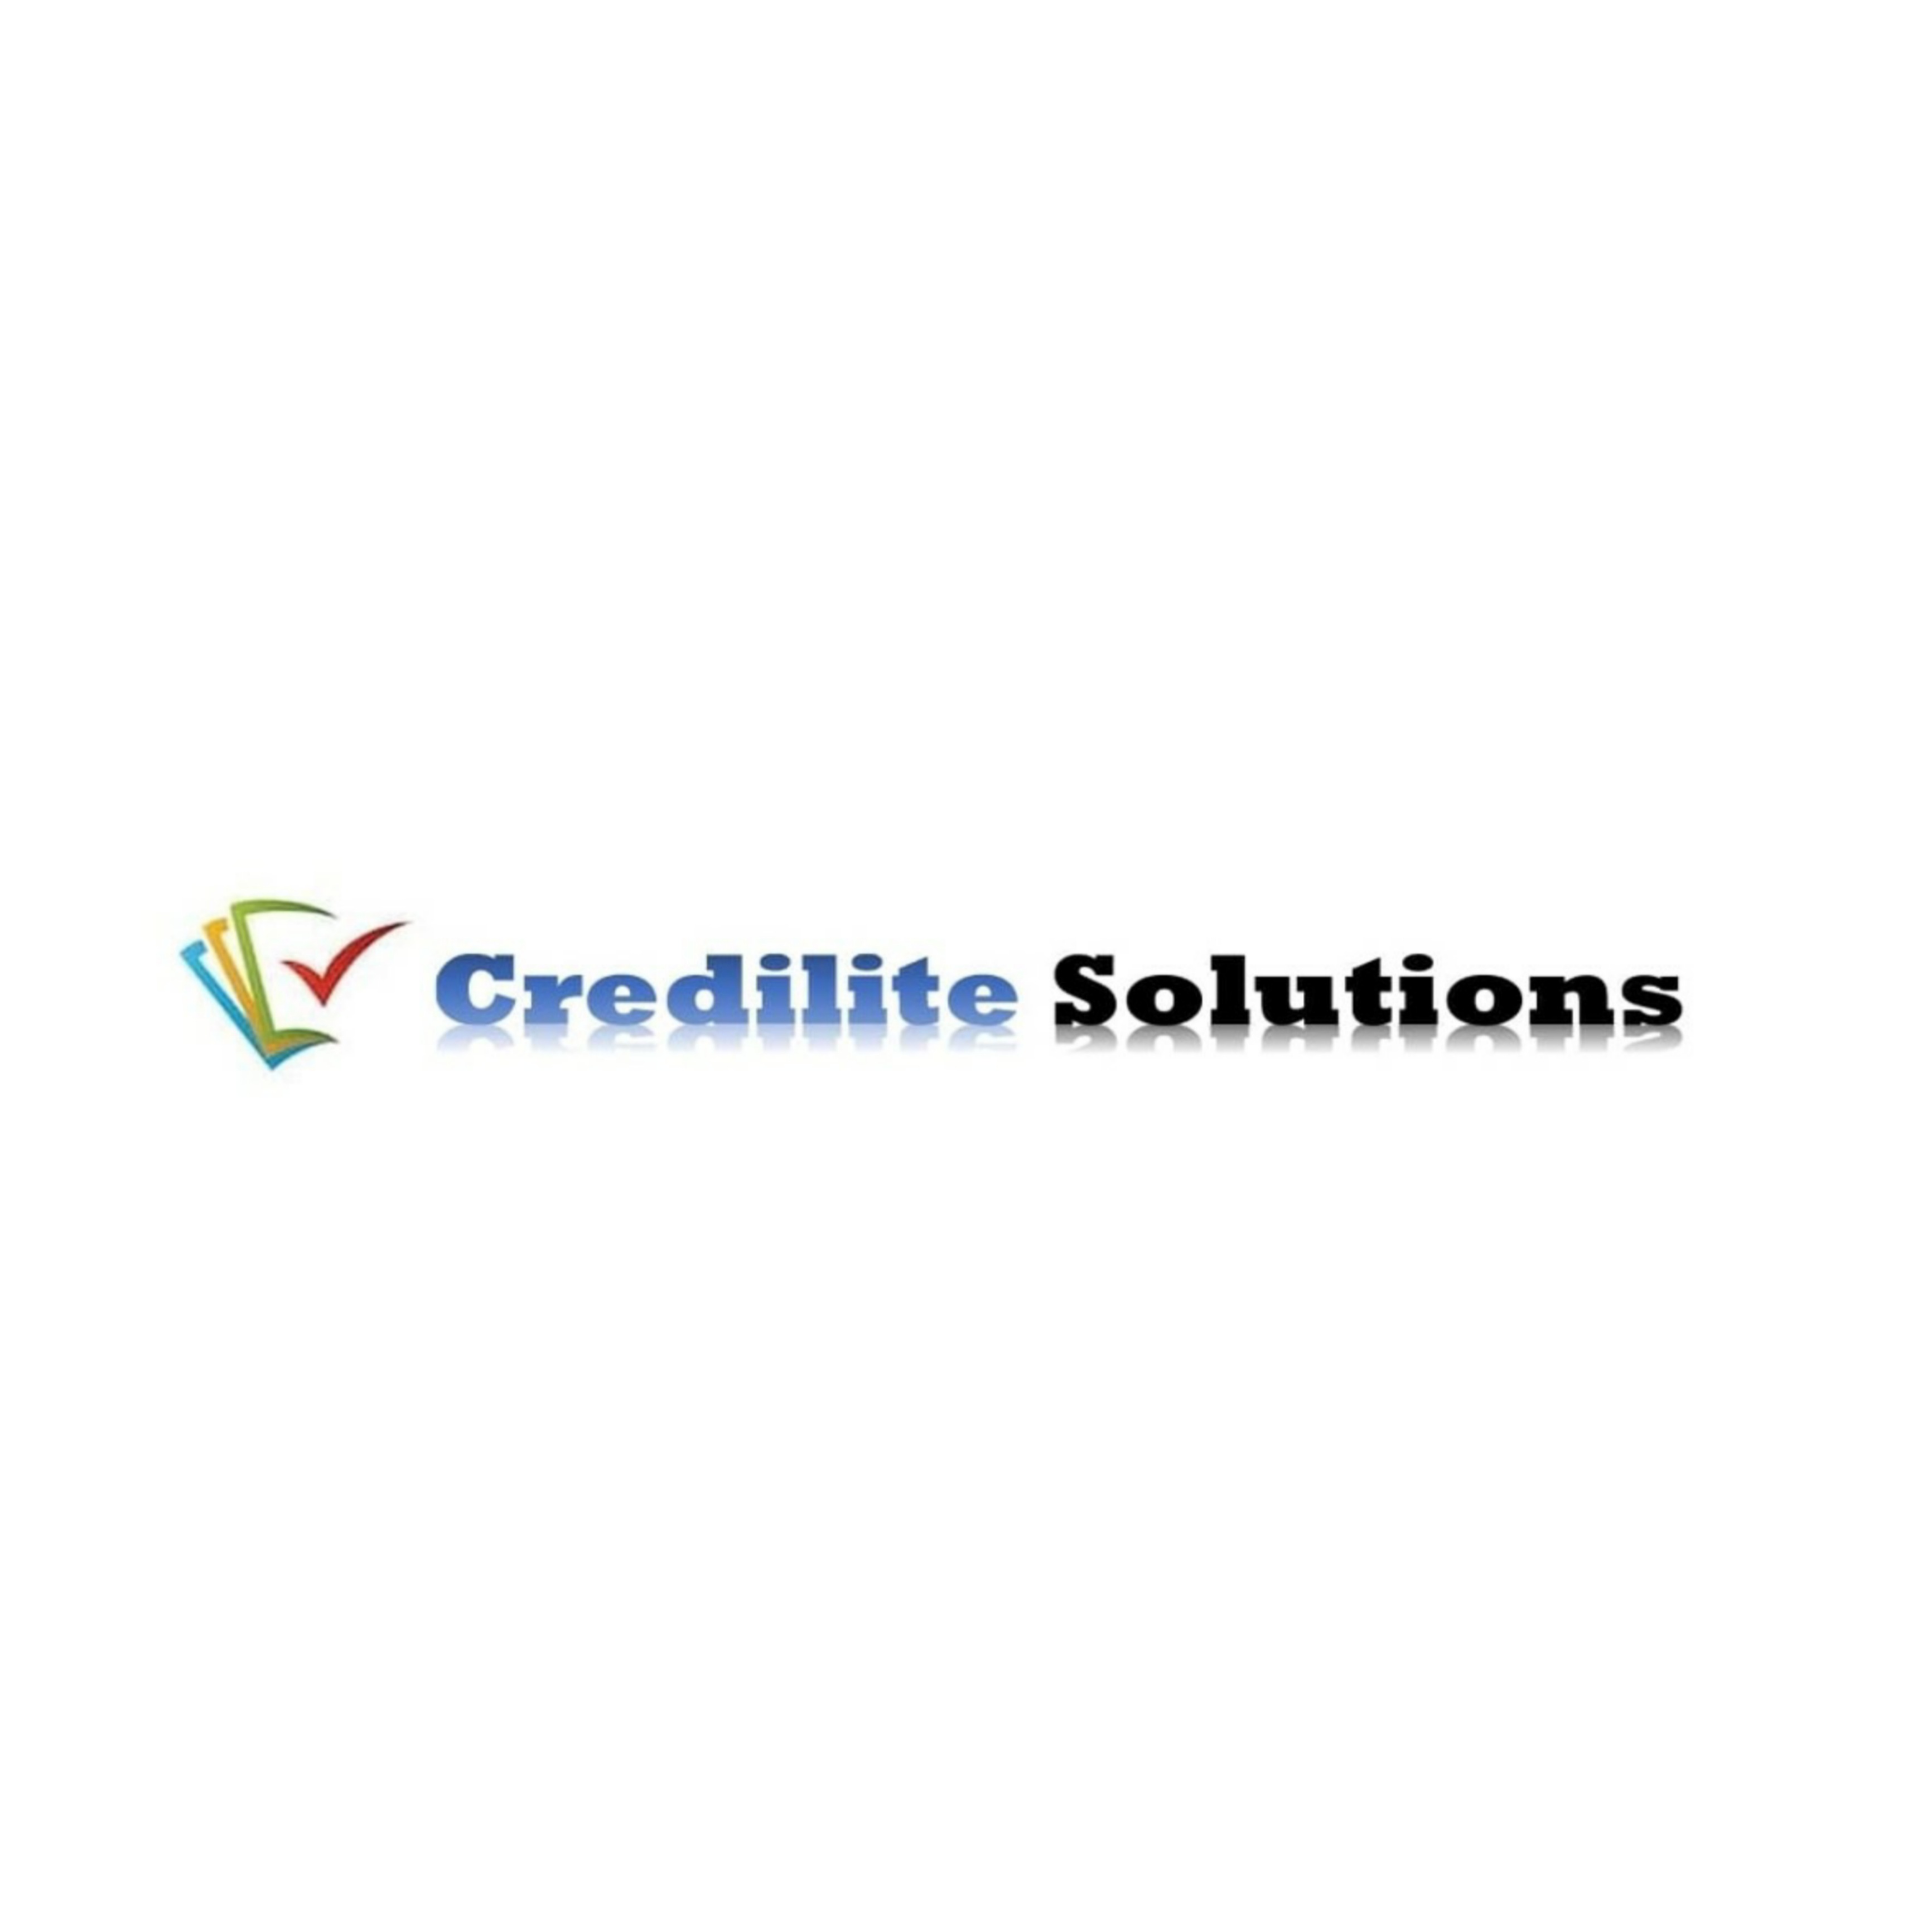 Credilite Solutions